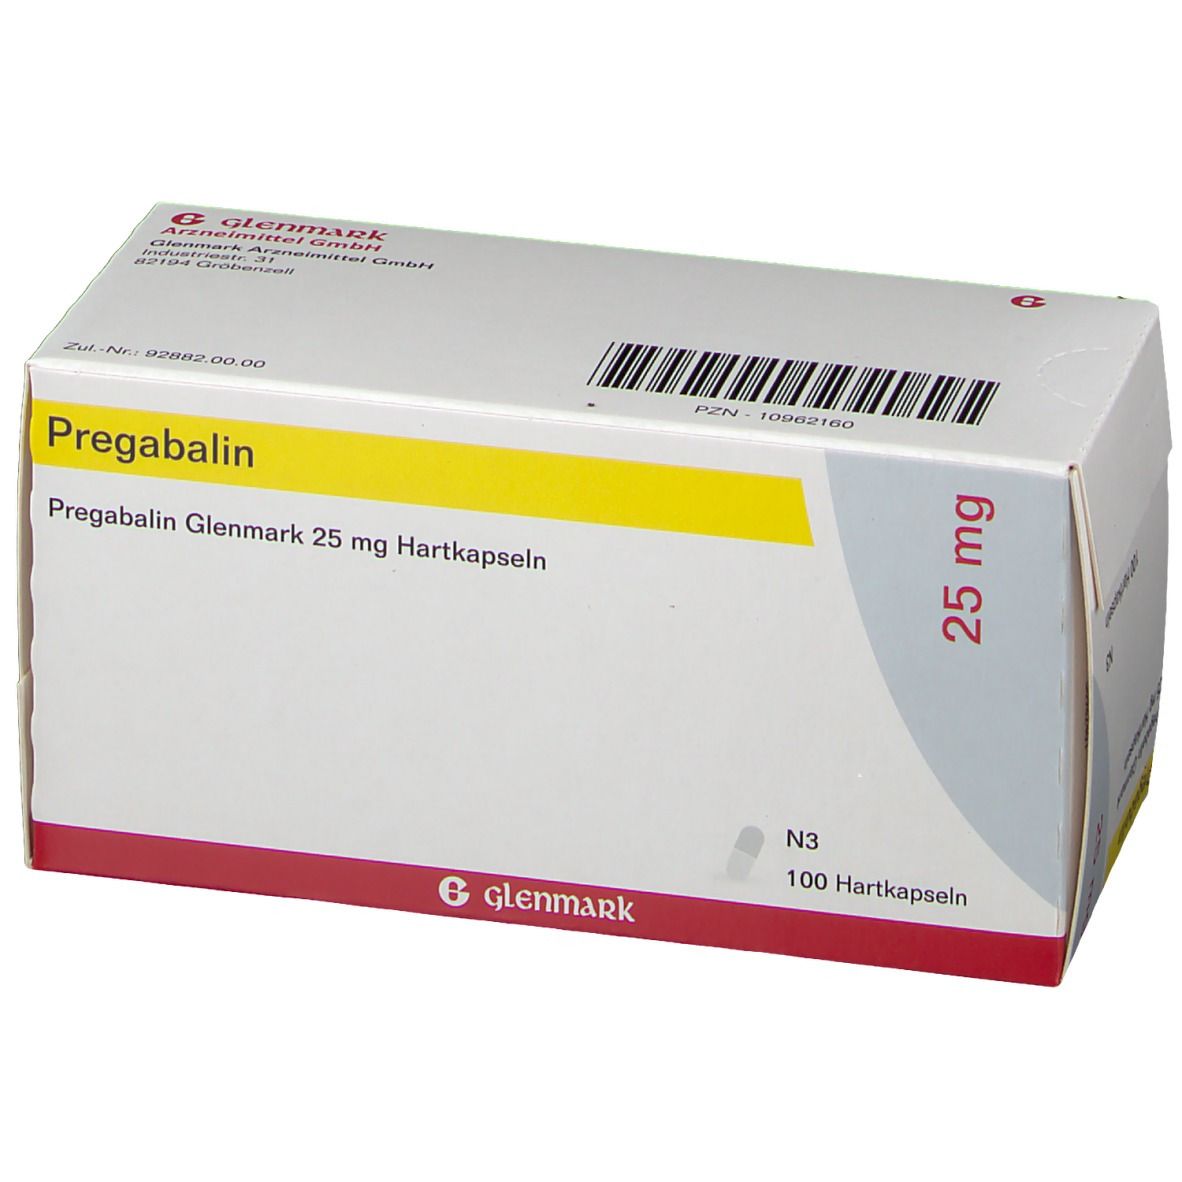 Pregabalin Glenmark 25 mg